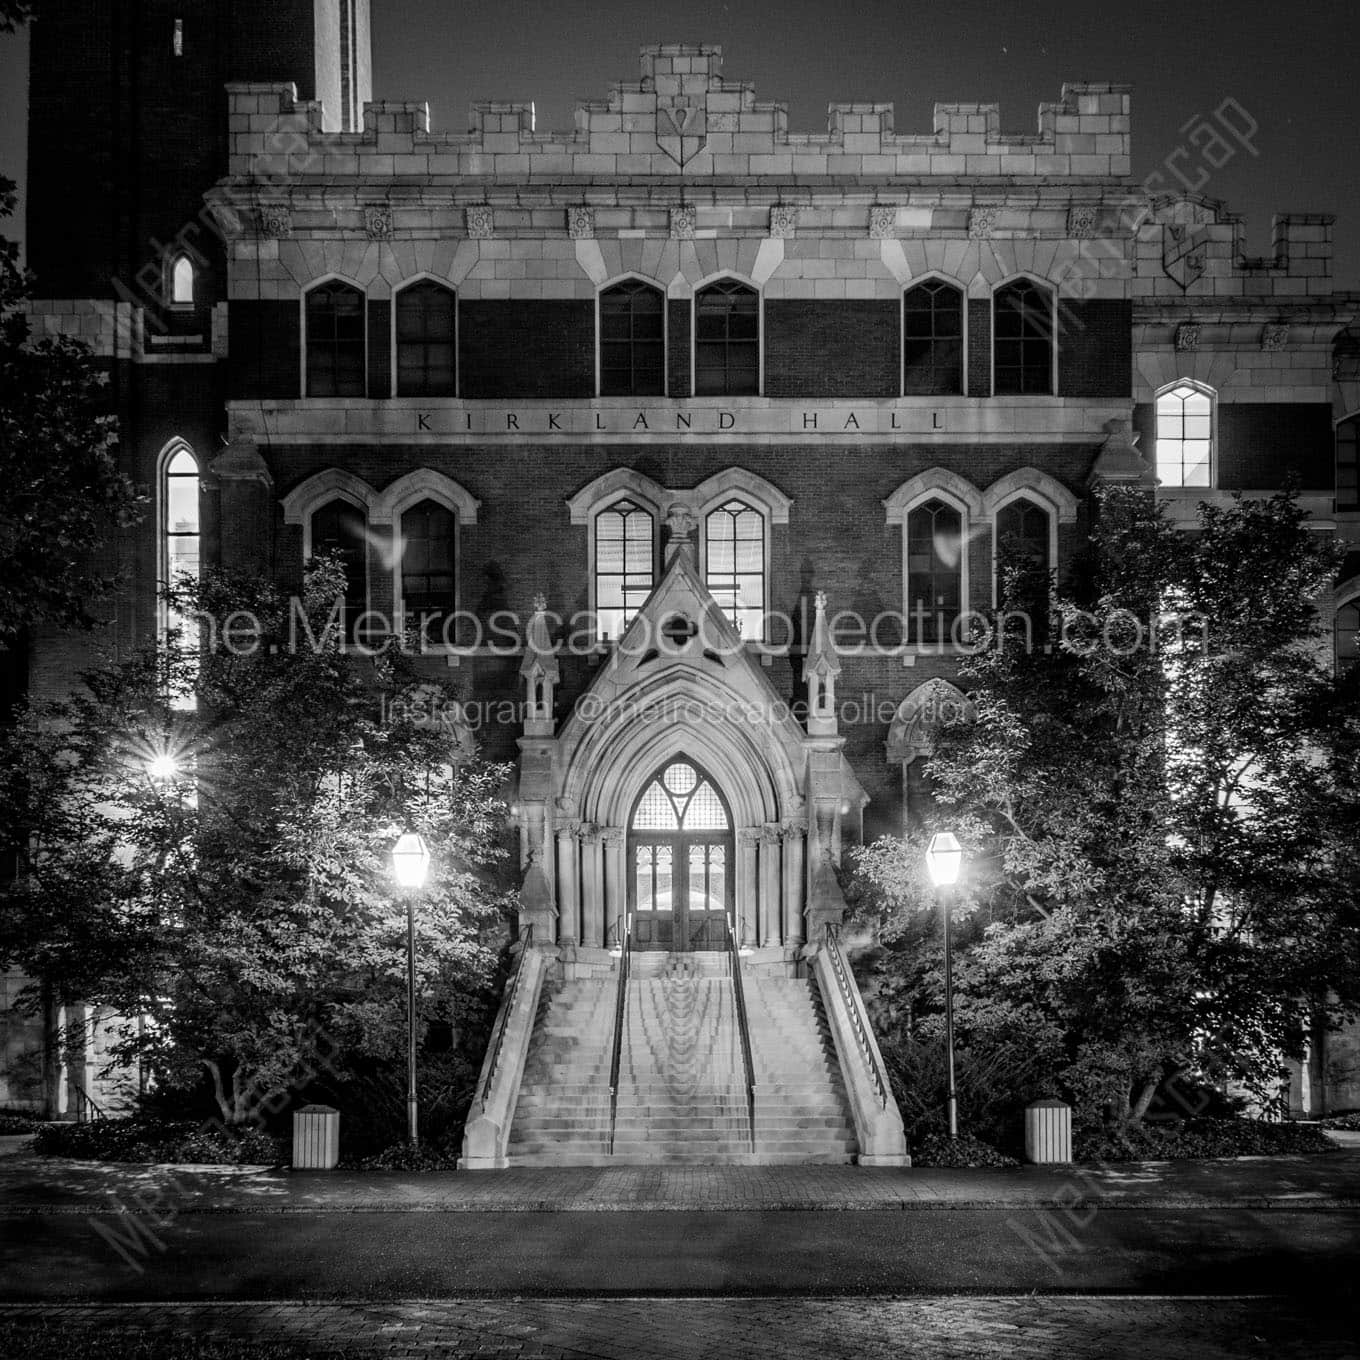 kirkland hall vanderbilt university at night Black & White Office Art